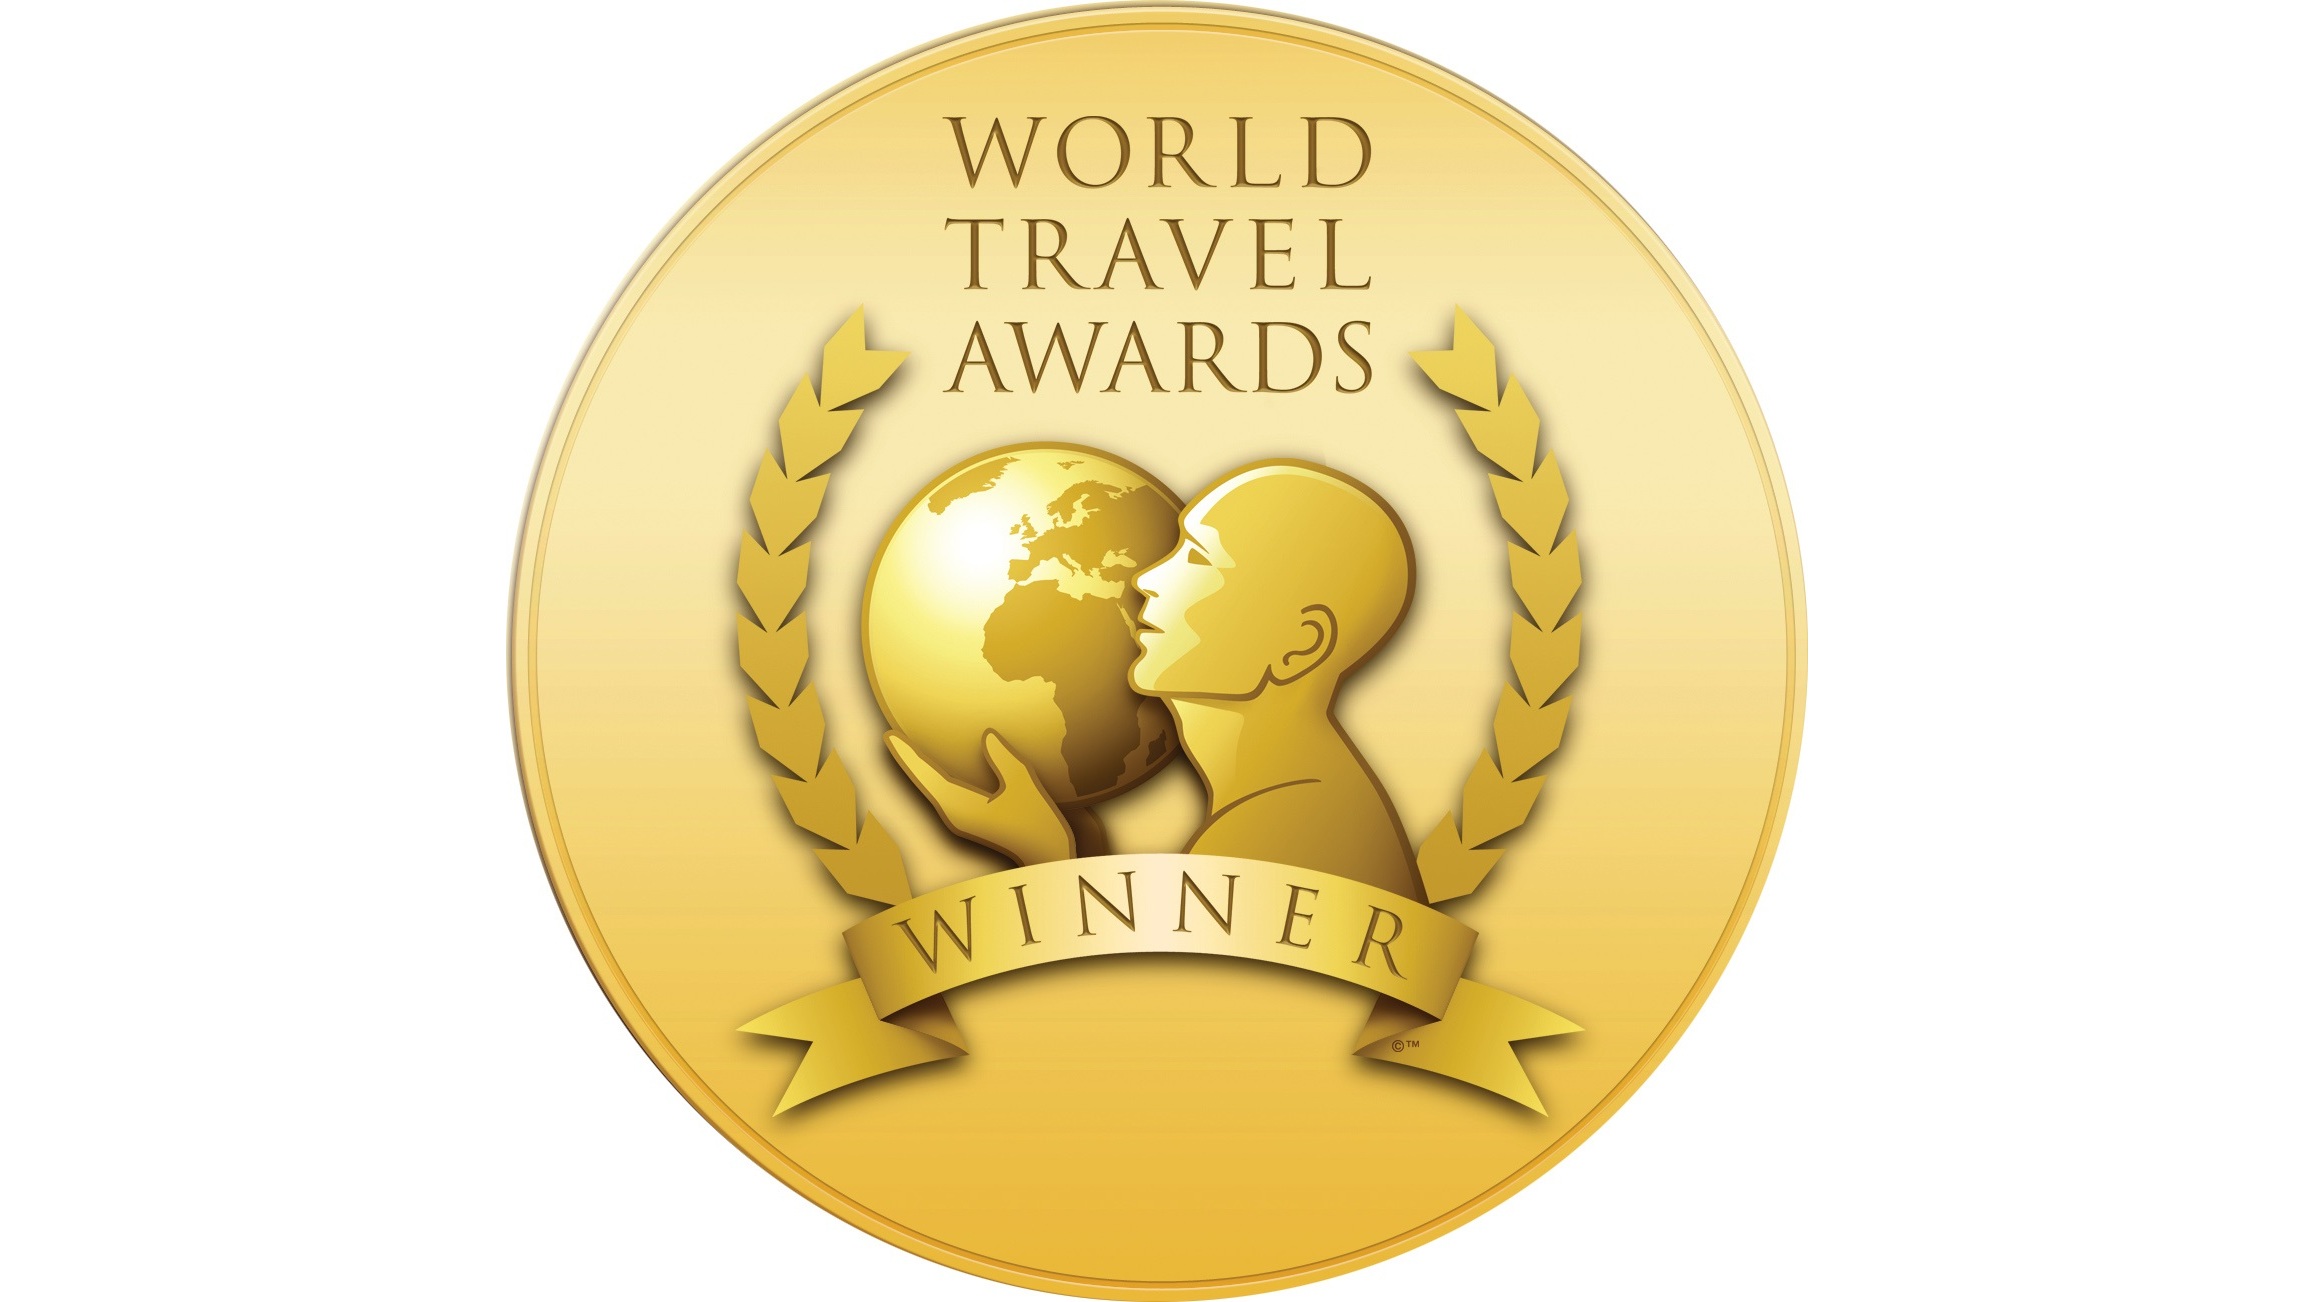 Local resorts earn World Travel Awards